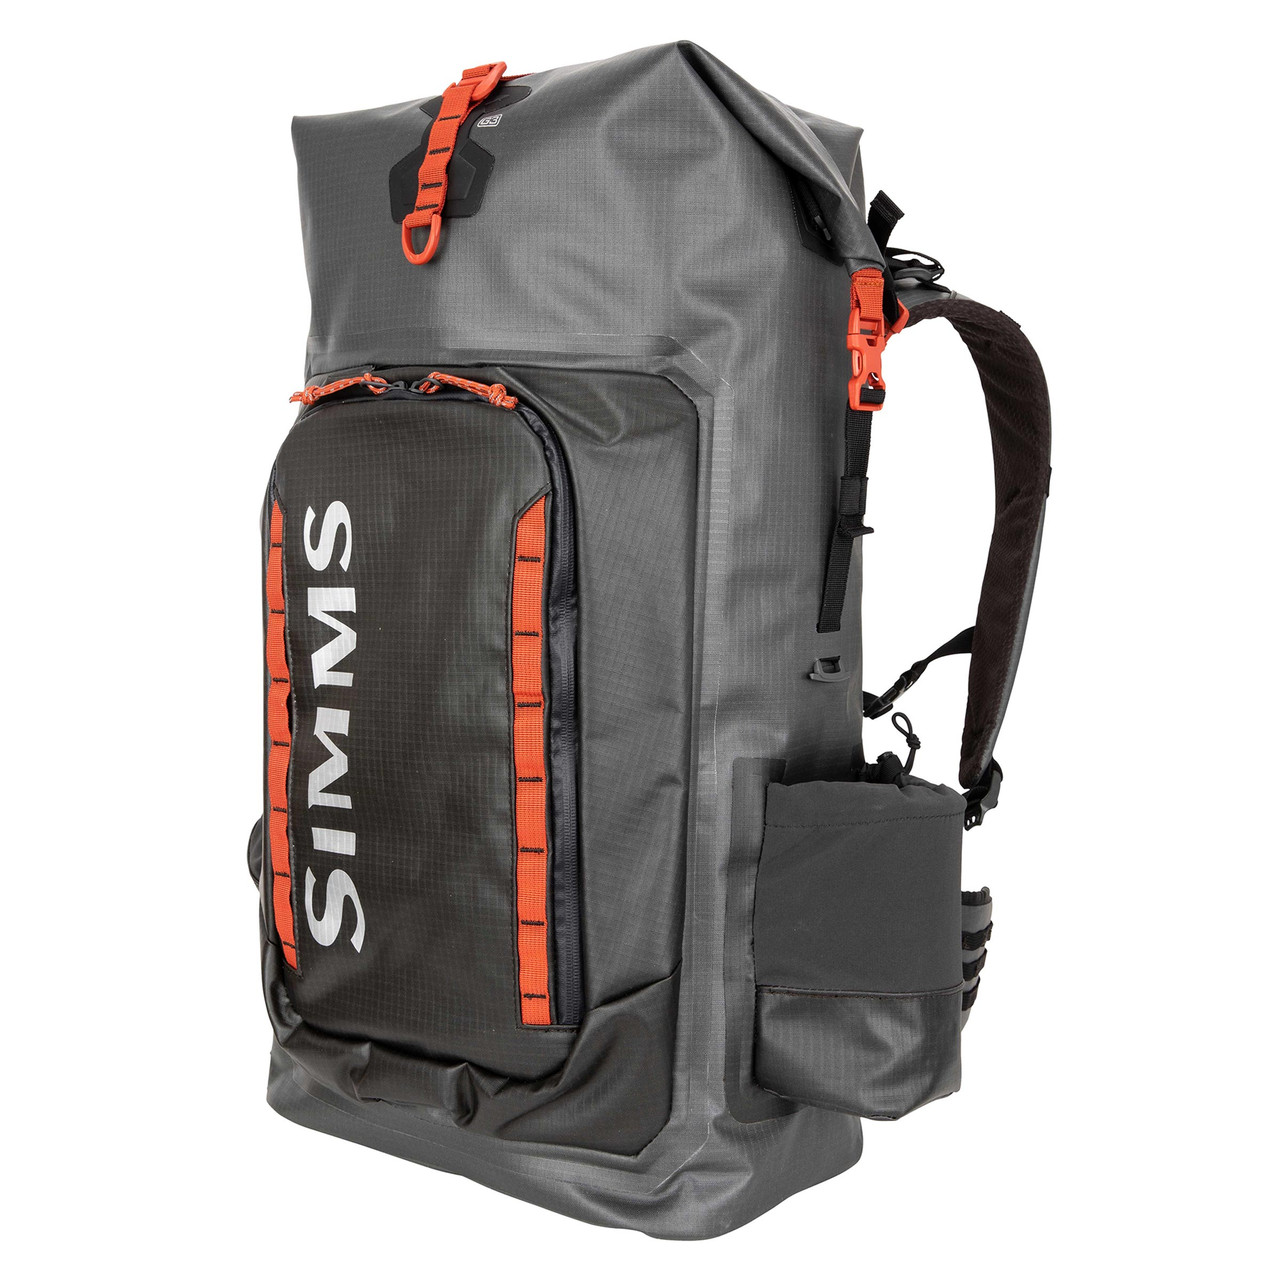 Simms G3 Guide Backpack - FishUSA